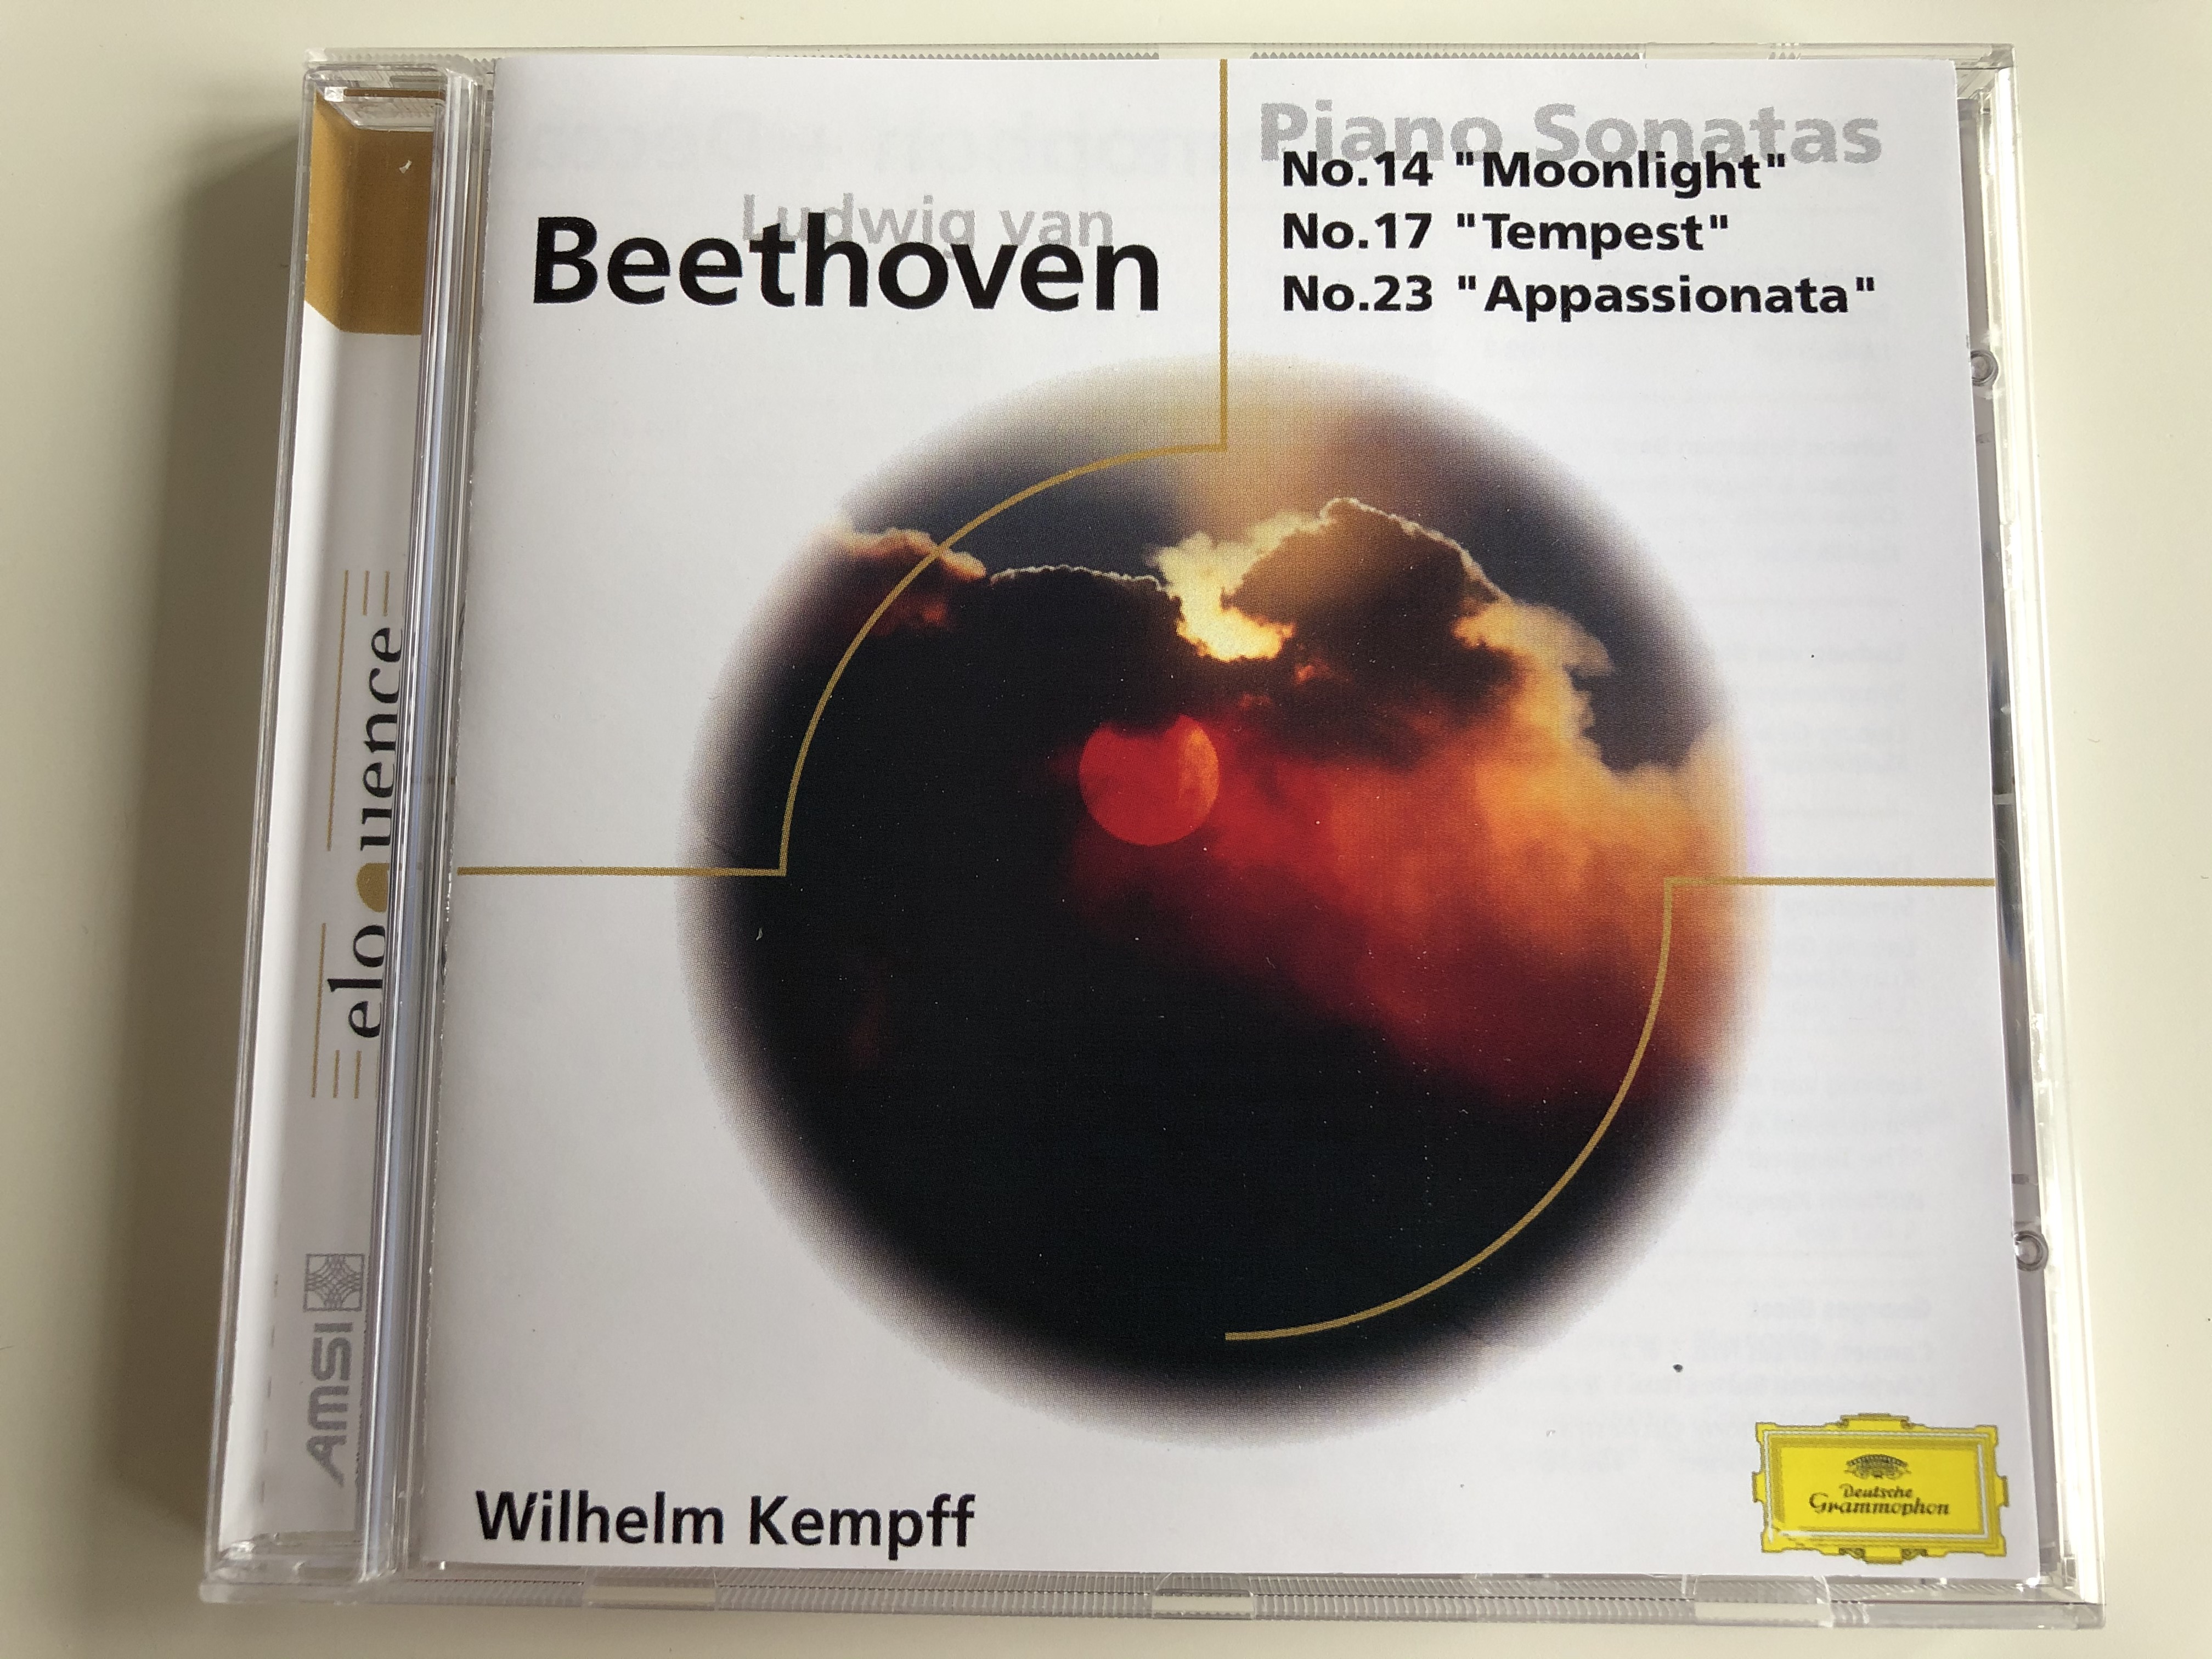 ludwig-van-beethoven-piano-sonatas-n.-14-moonlight-n.-17-tempest-n.-23-appassionata-wilhelm-kempff-eloquence-audio-cd-1965-469-618-2-1-.jpg